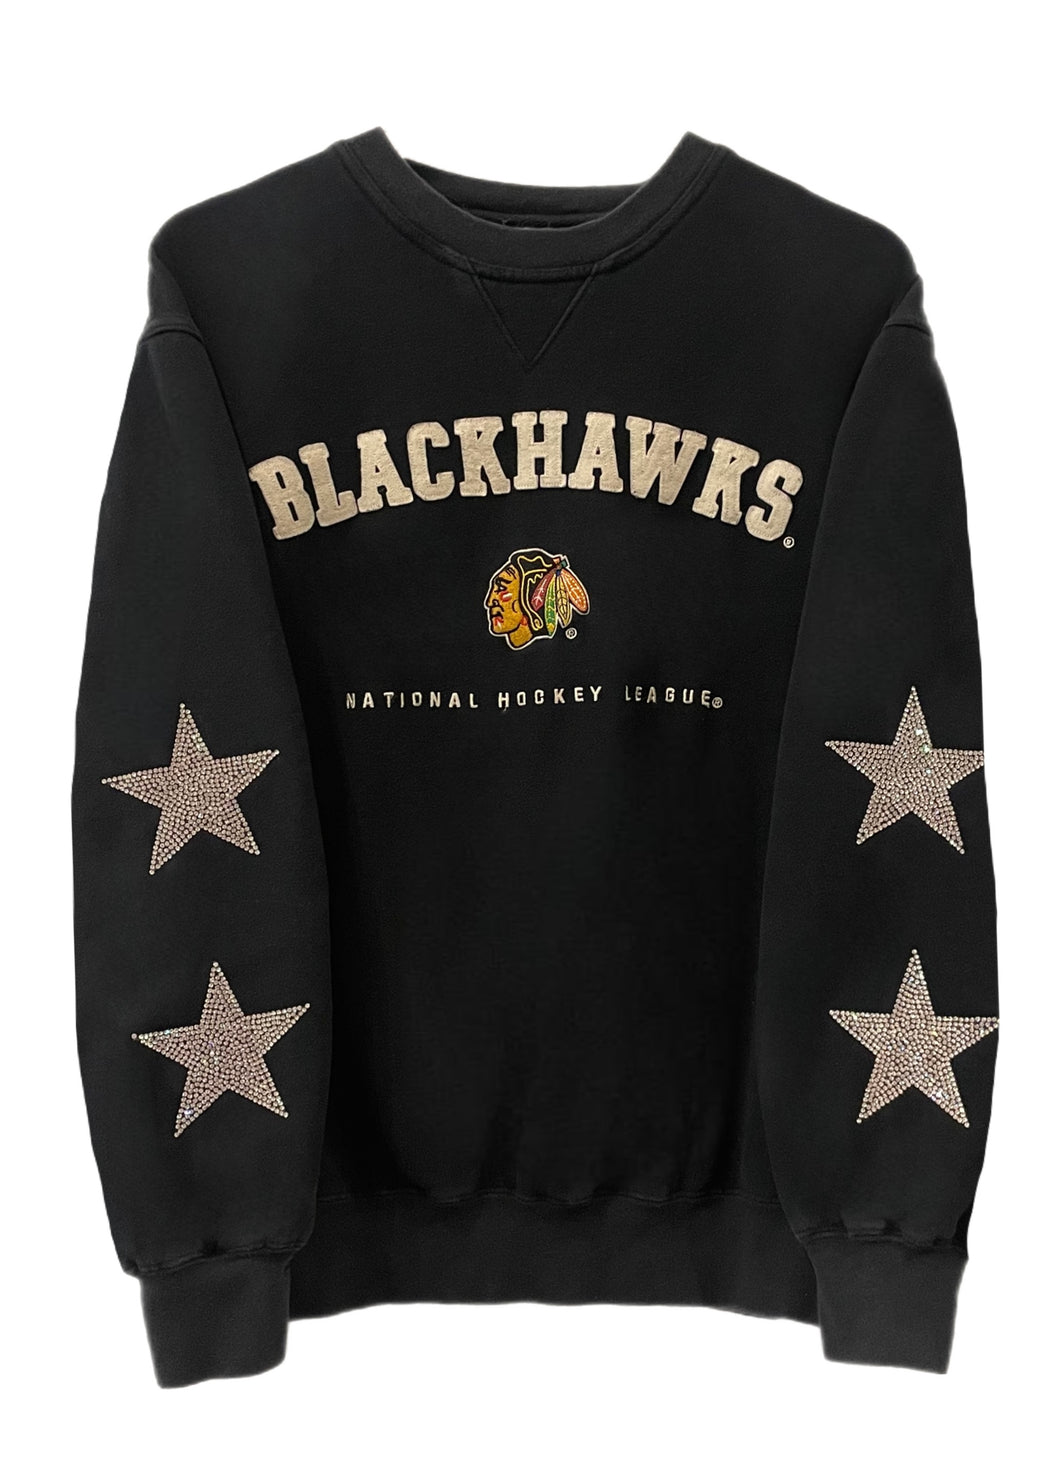 Chicago Blackhawks, NHL One of a KIND Vintage Sweatshirt with Crystal Star Design, Custom Name + Number